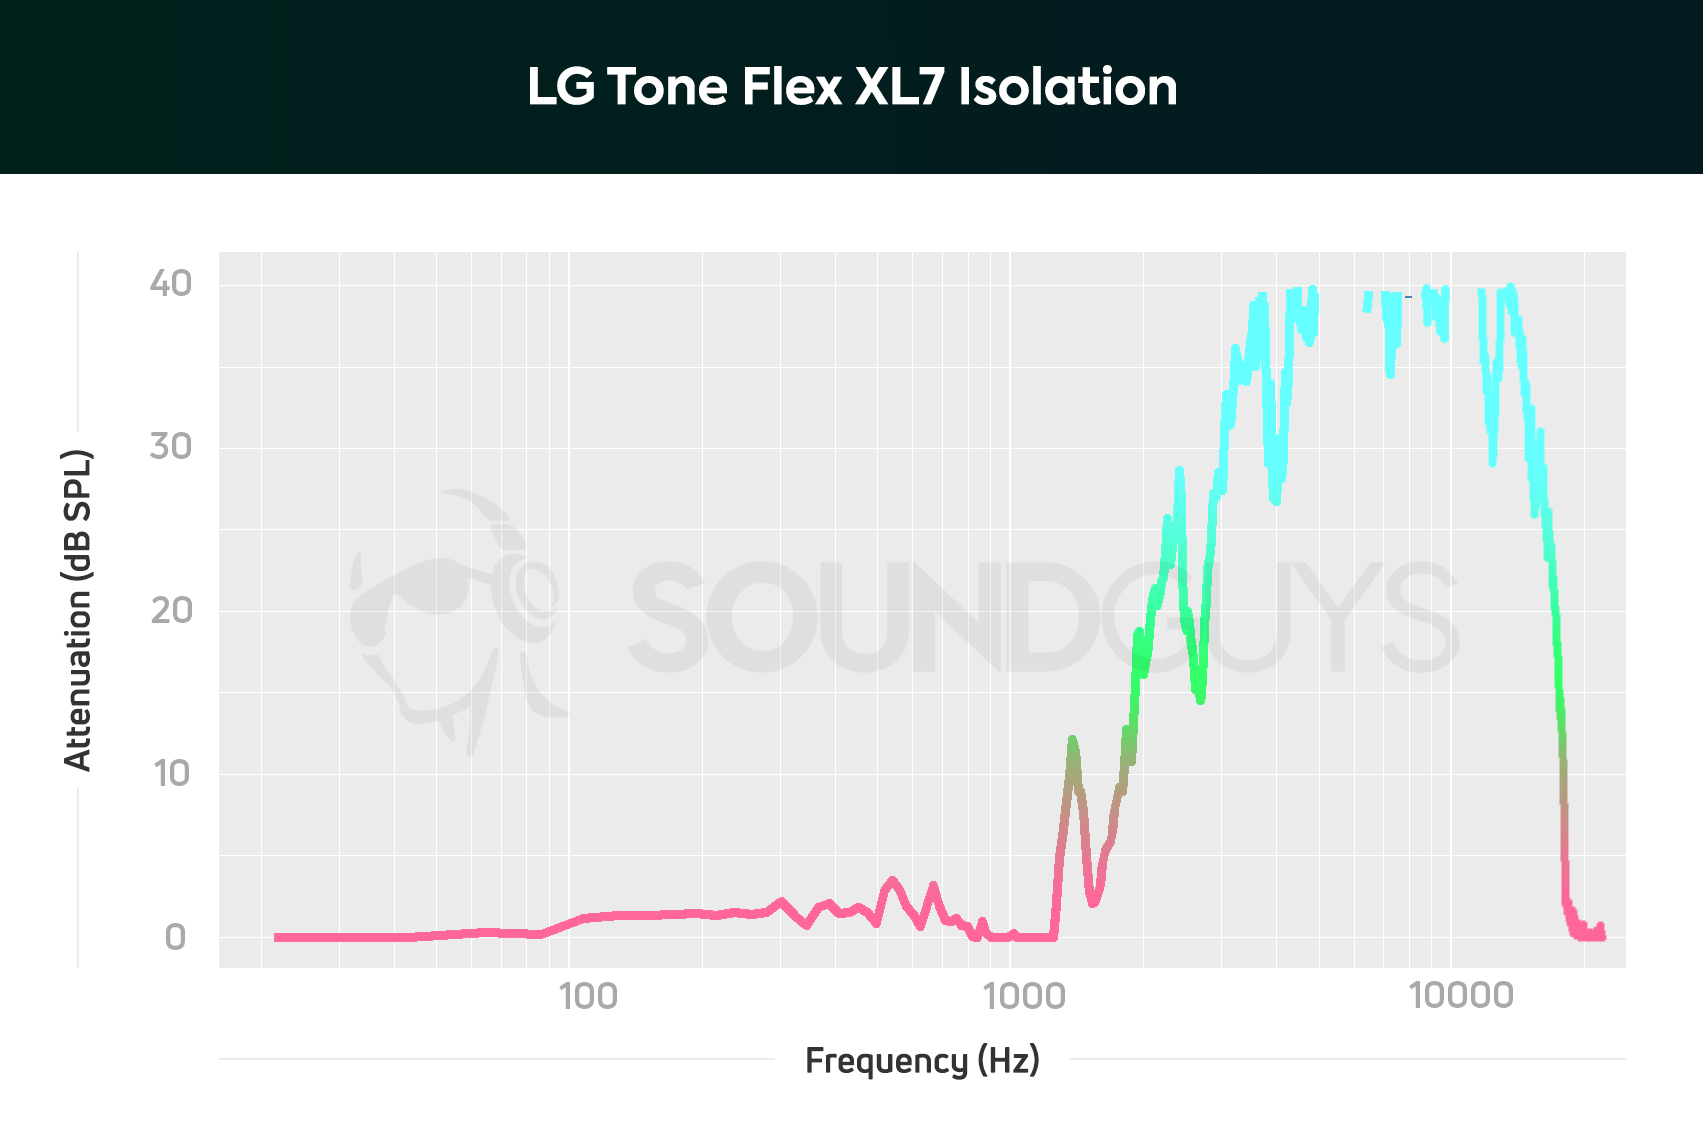 LG Tone Flex XL7 isolation chart.